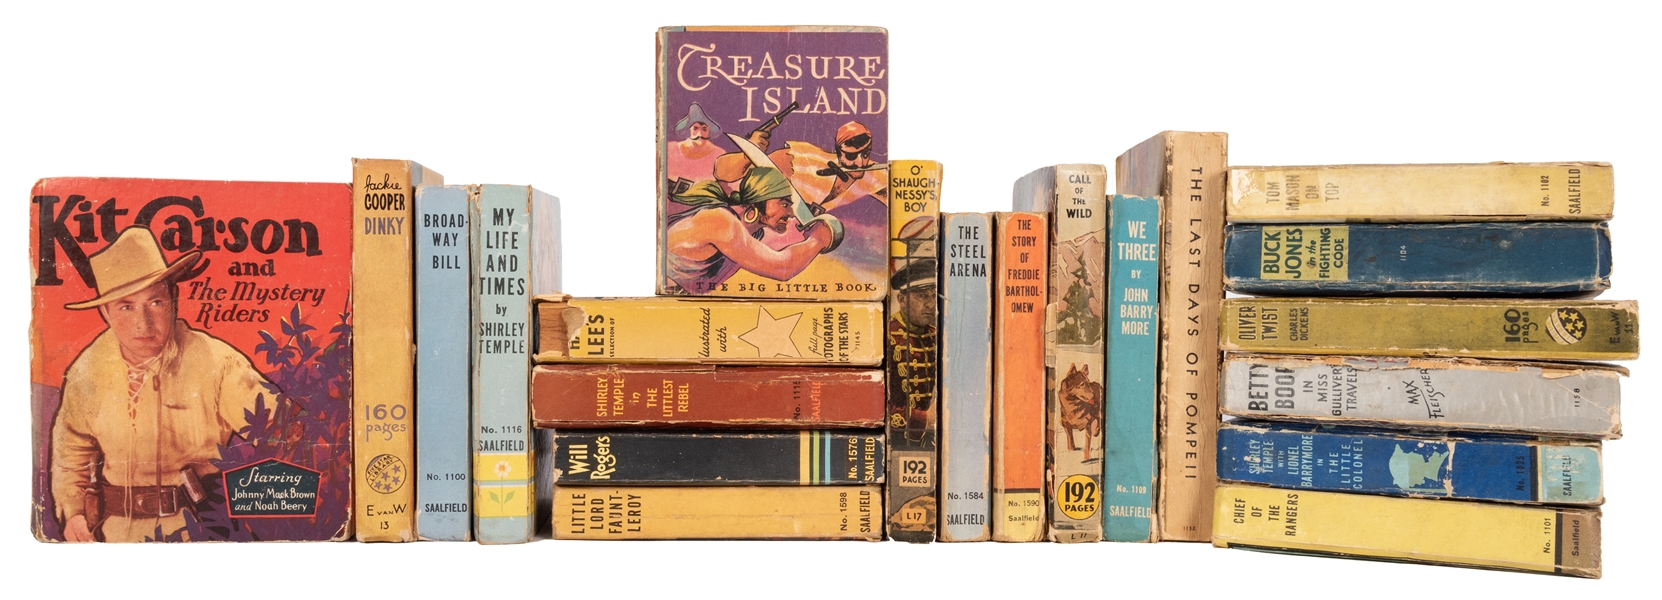 Film, Television, and Classic Literature. 40 Big Little Books.